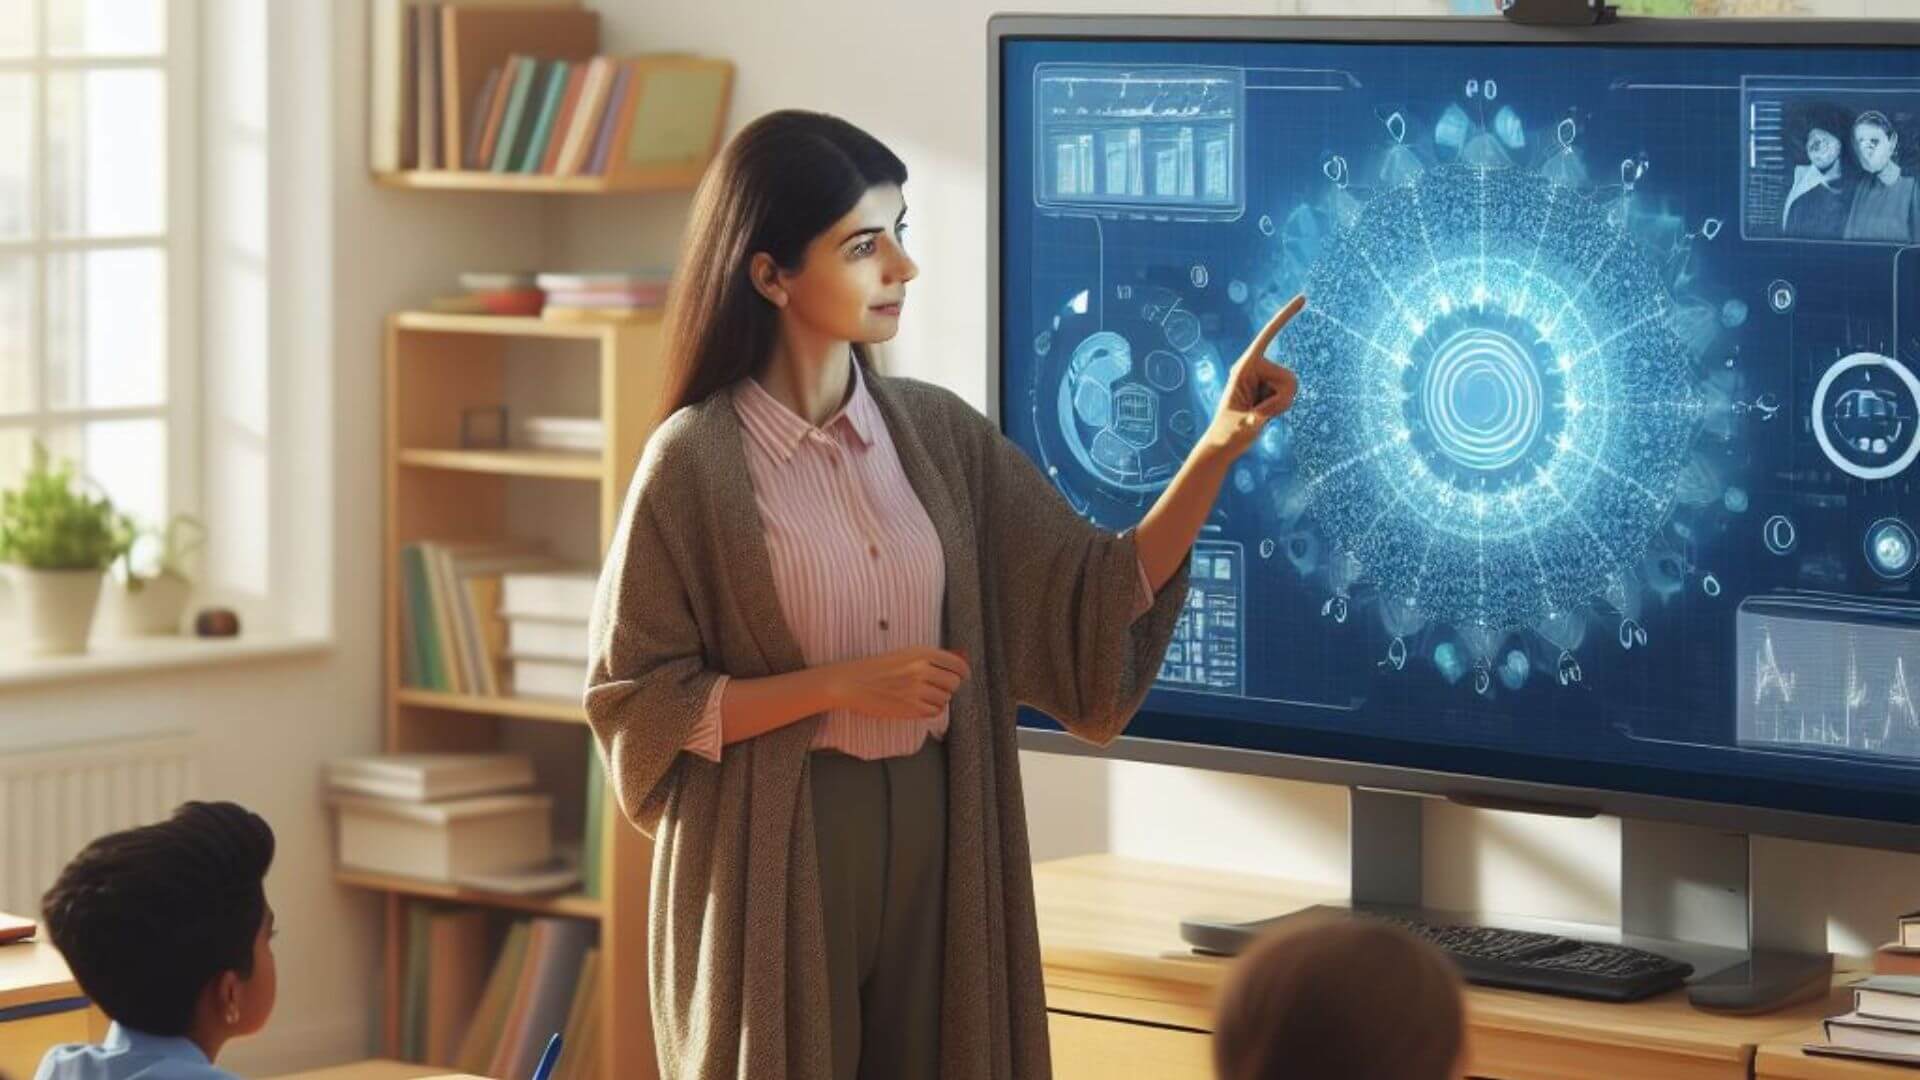 Teacher using a Digital smart board in classroom